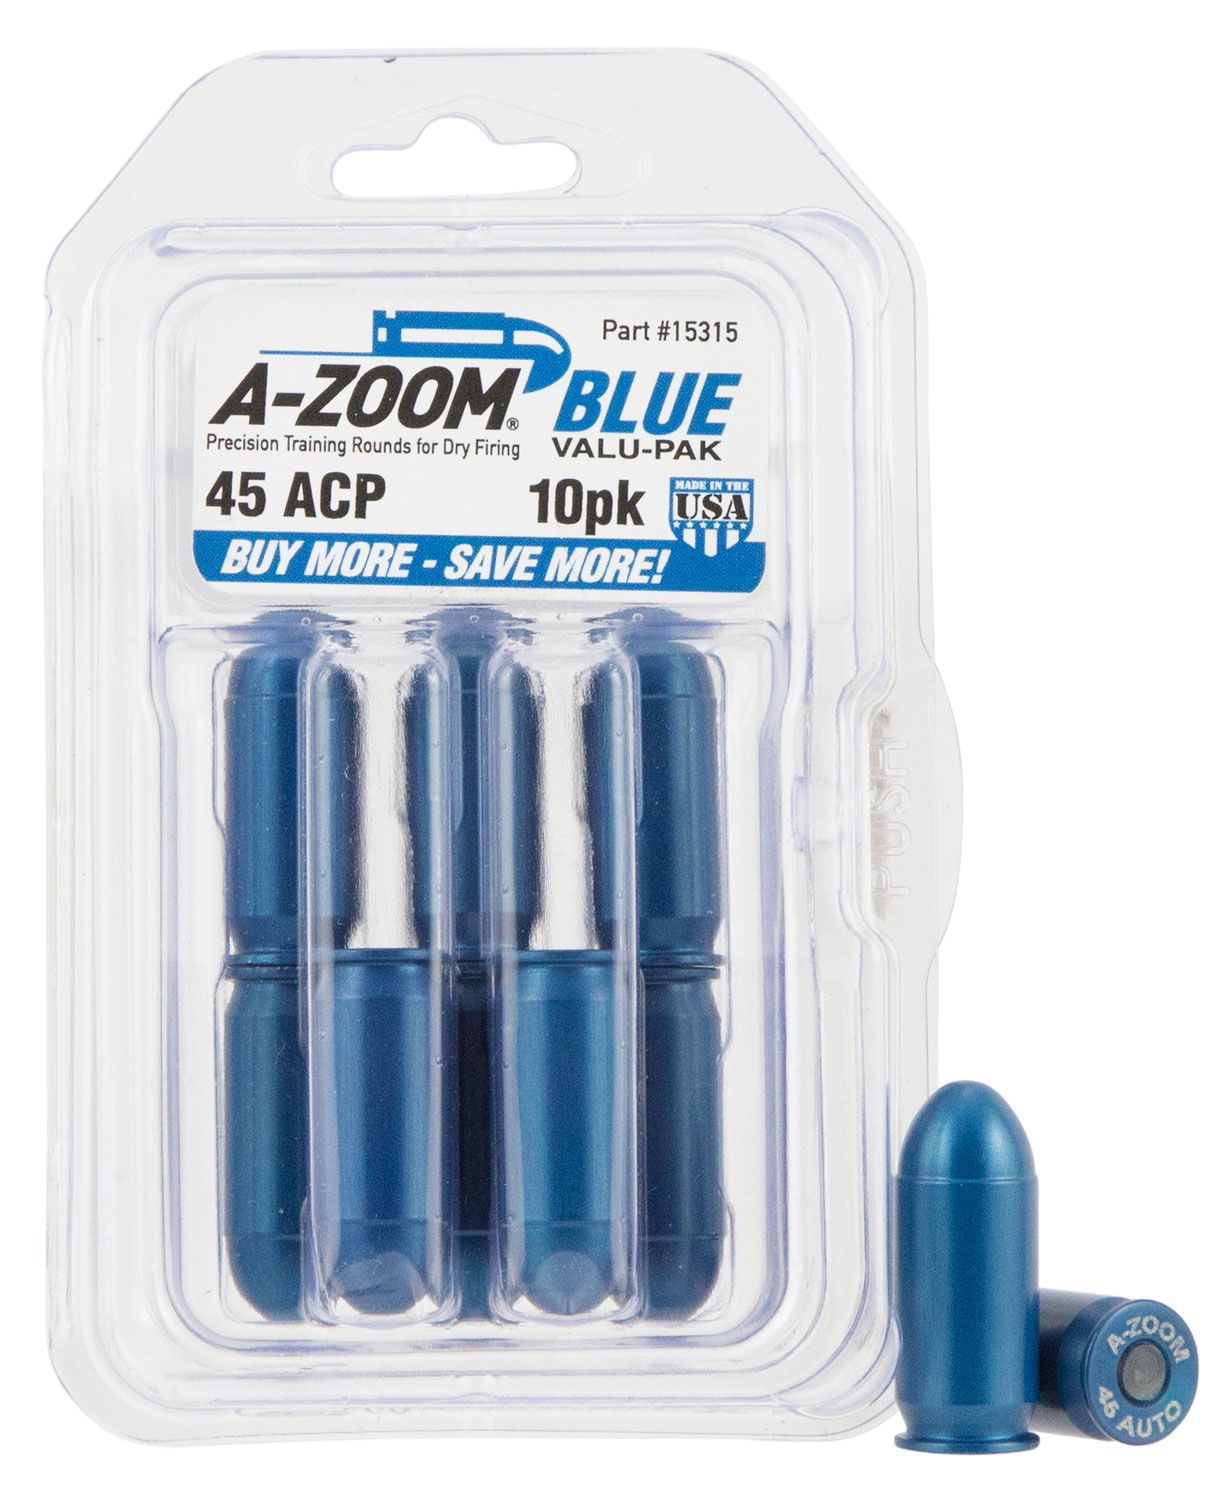 A-Zoom 15315 Value Pack Pistol 45 ACP Aluminum 10 Pk